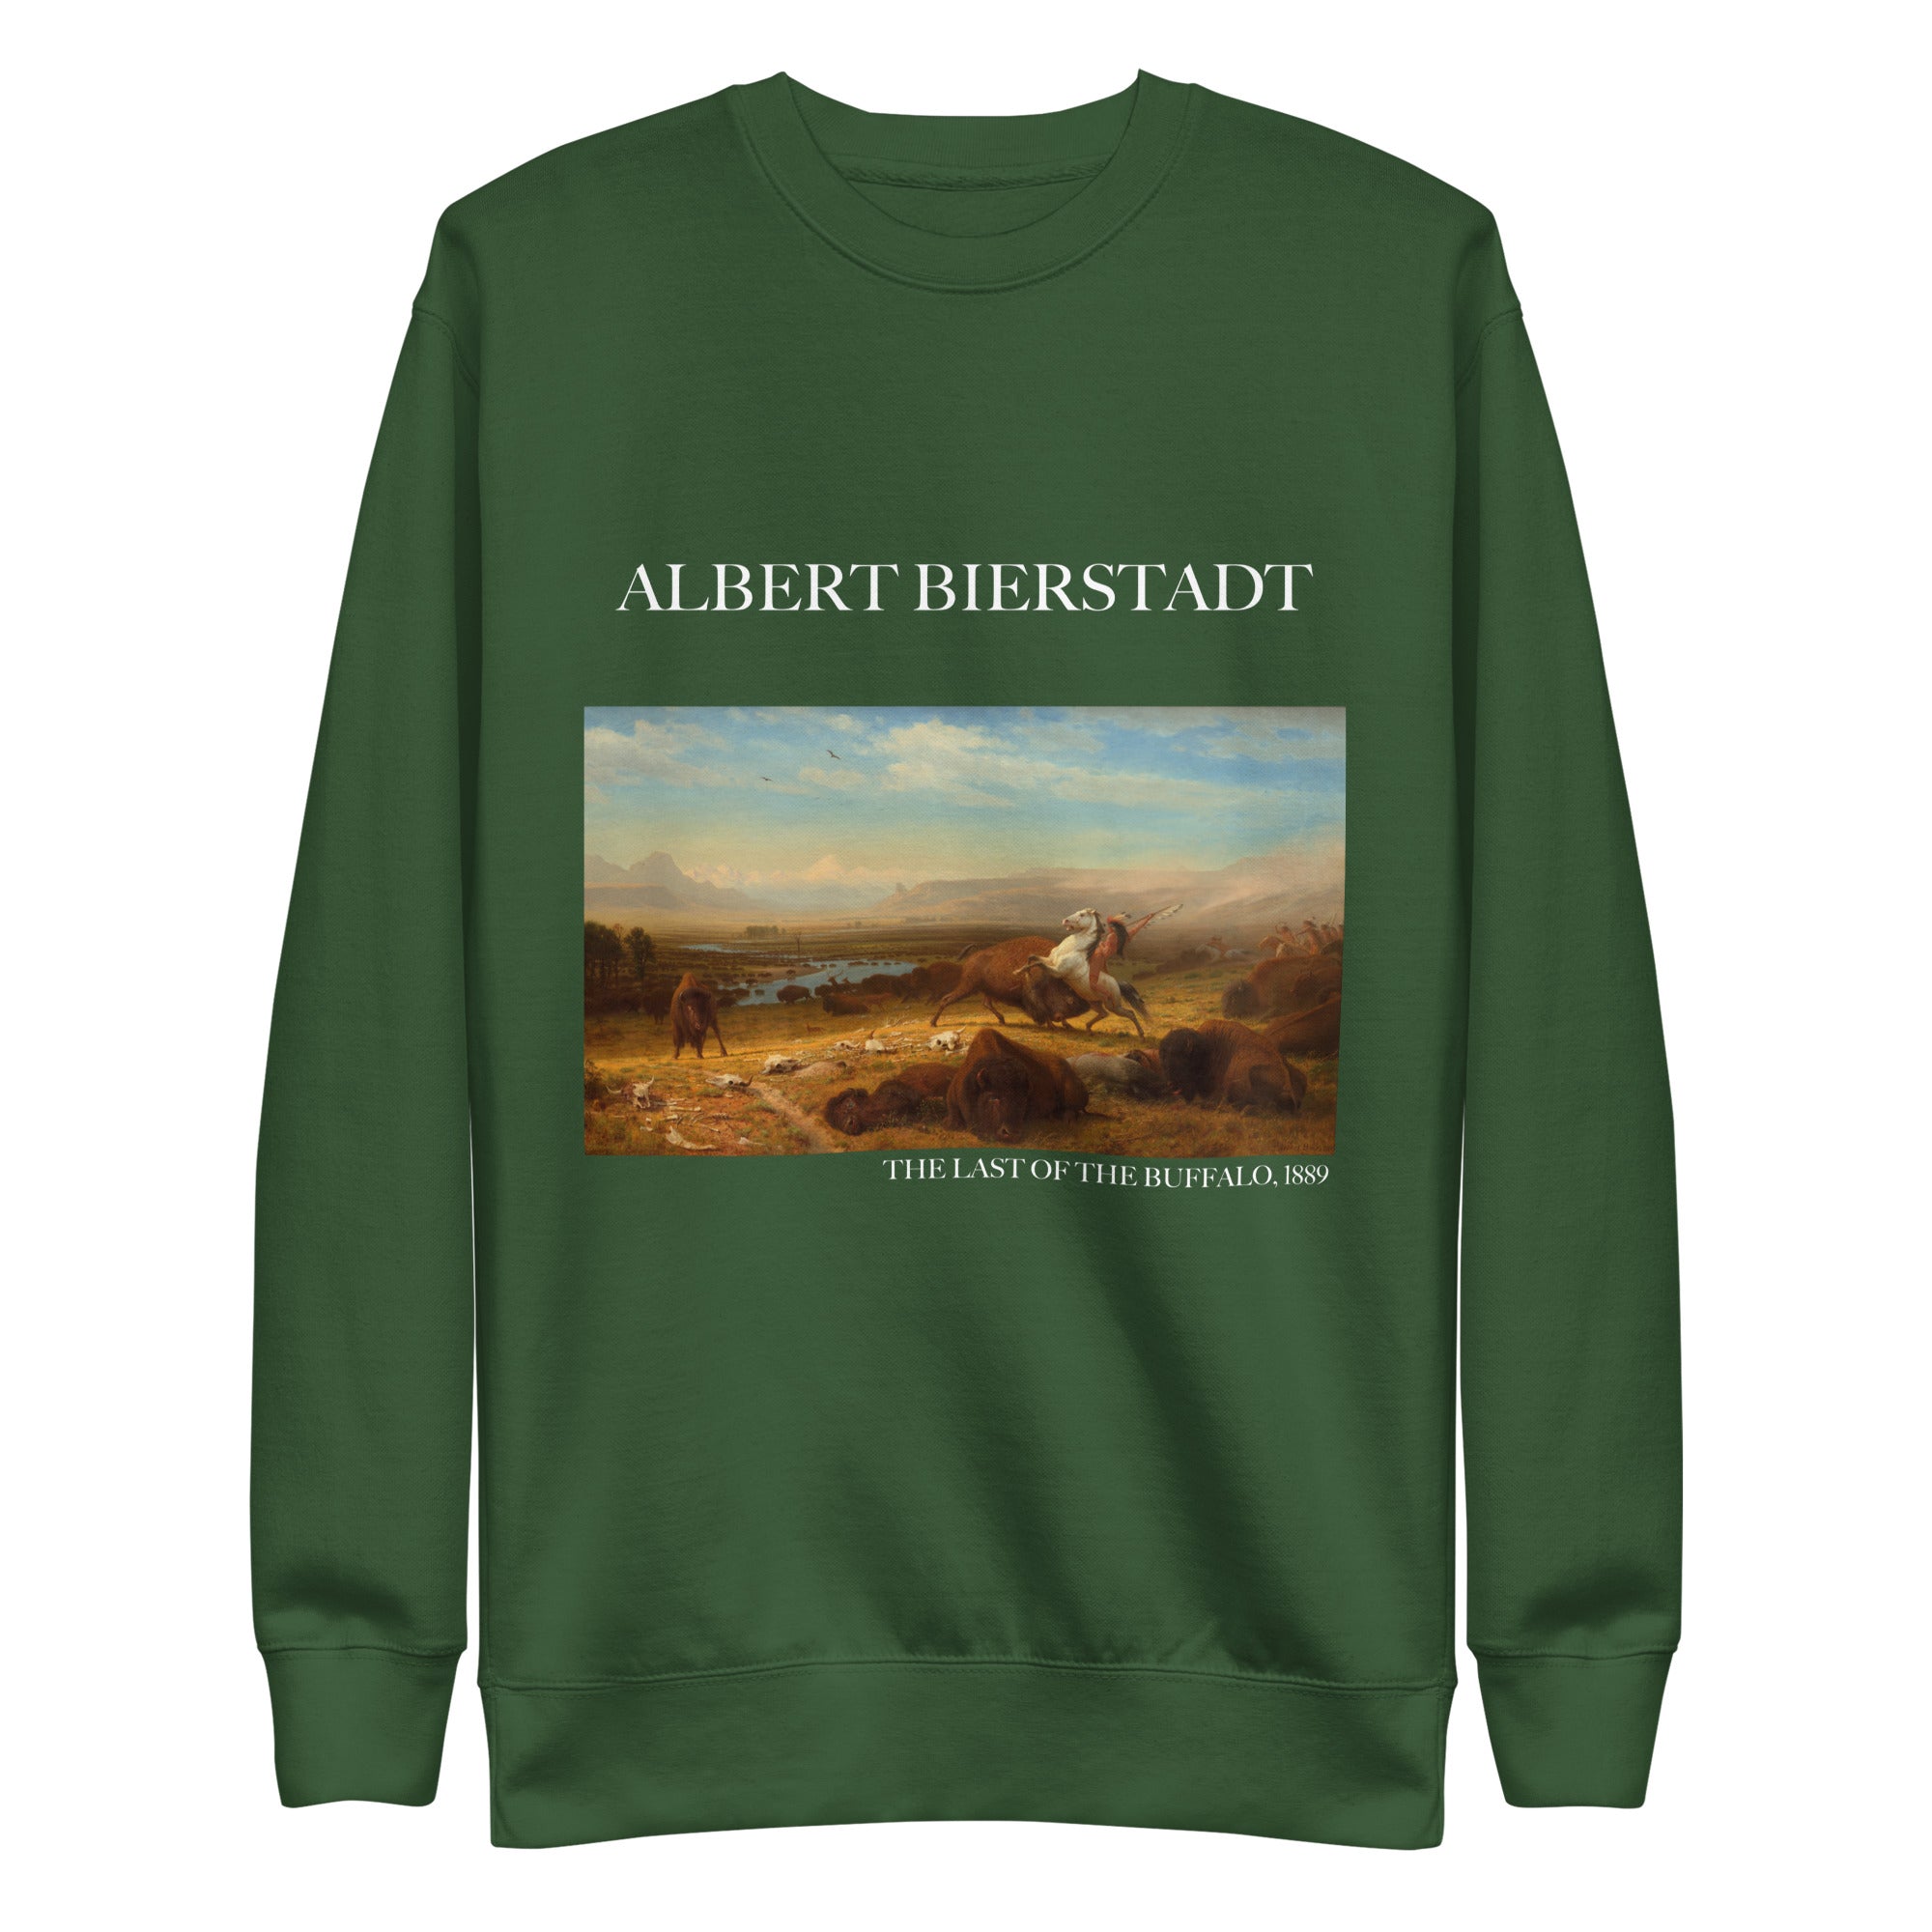 Albert Bierstadt 'The Last of the Buffalo' Famous Painting Sweatshirt | Unisex Premium Sweatshirt